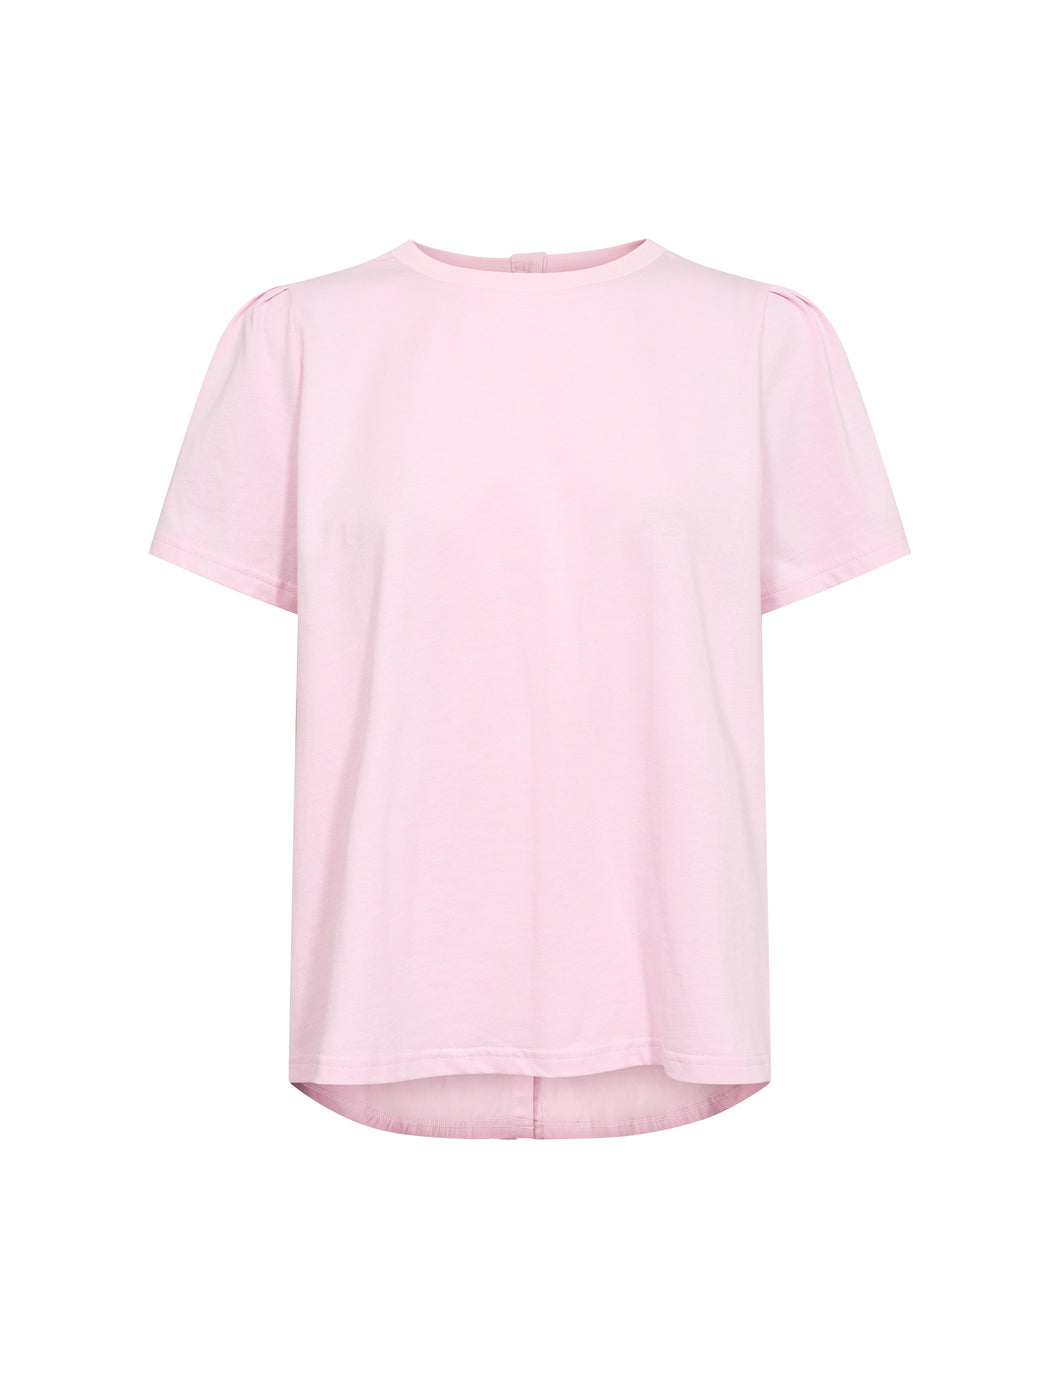 Levete Room Kowa T-shirt - Pink